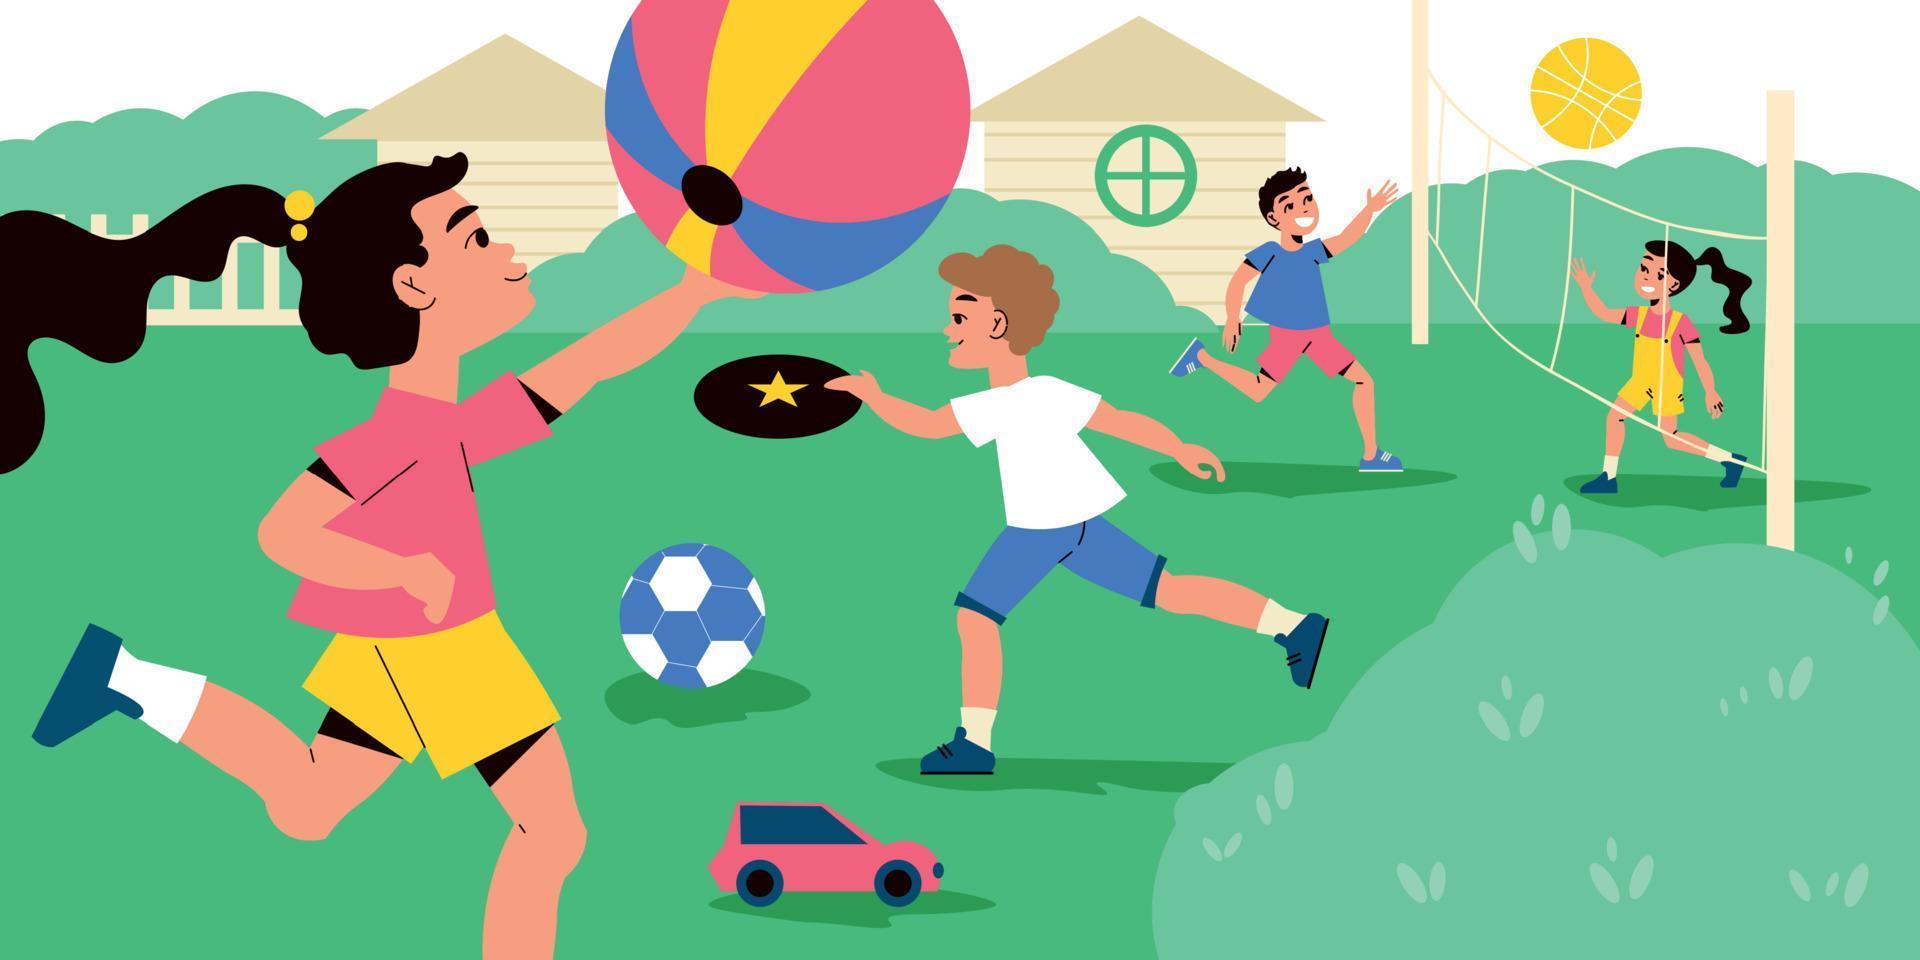 Children Active Games Illustration vector